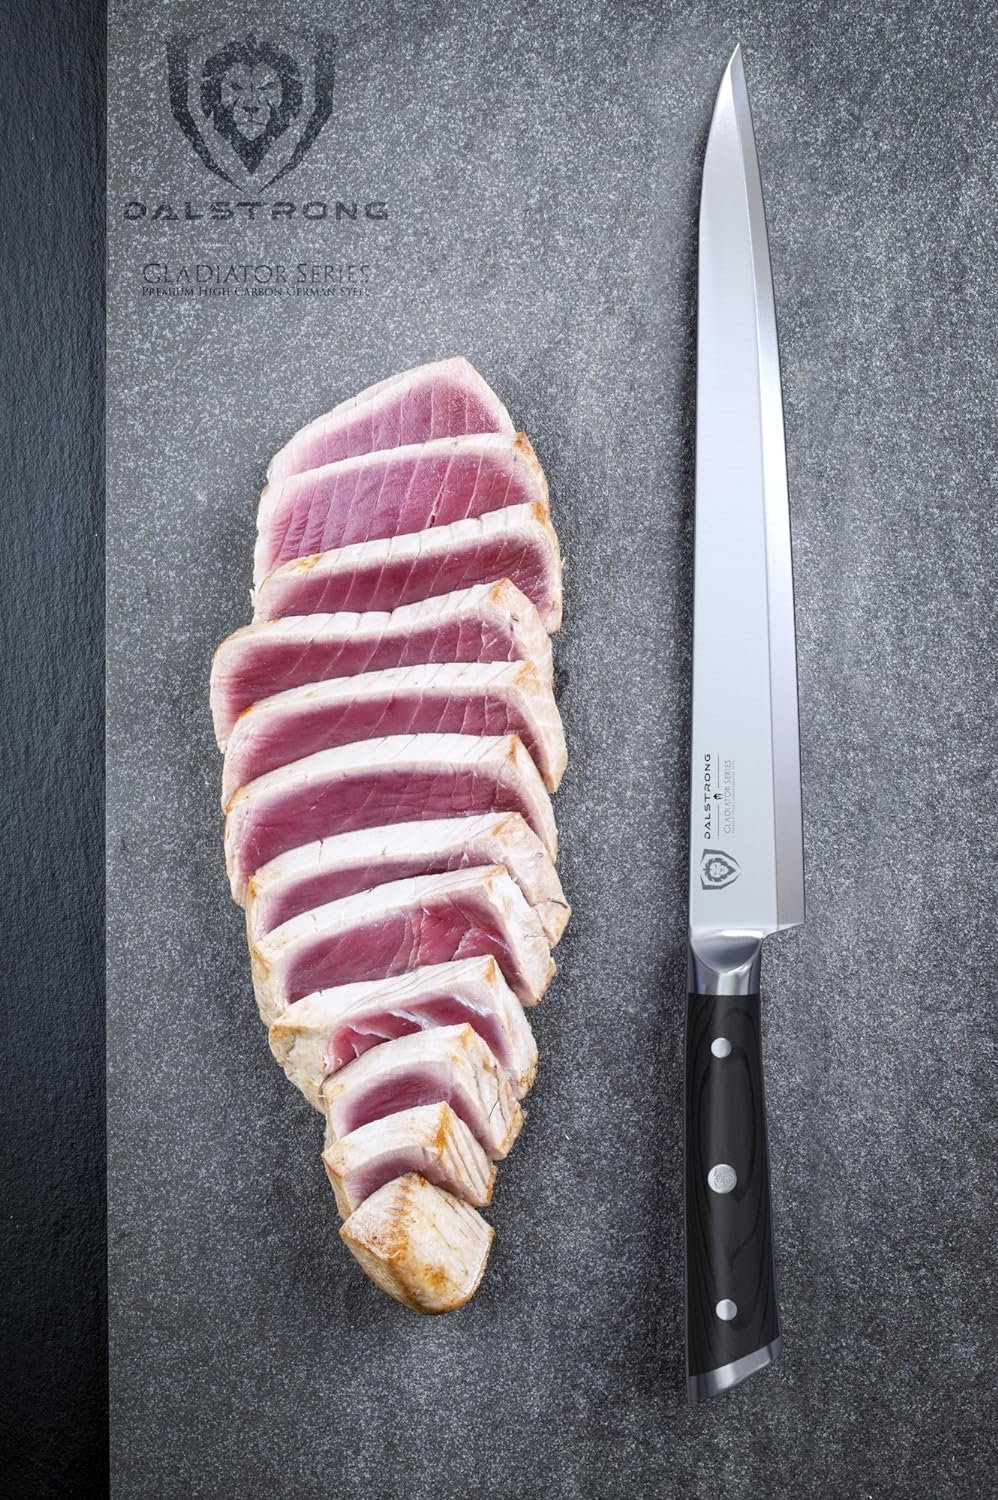 KD Yanagiba Knife Sushi Knife G10 Handle Kitchen Knife with Sheath